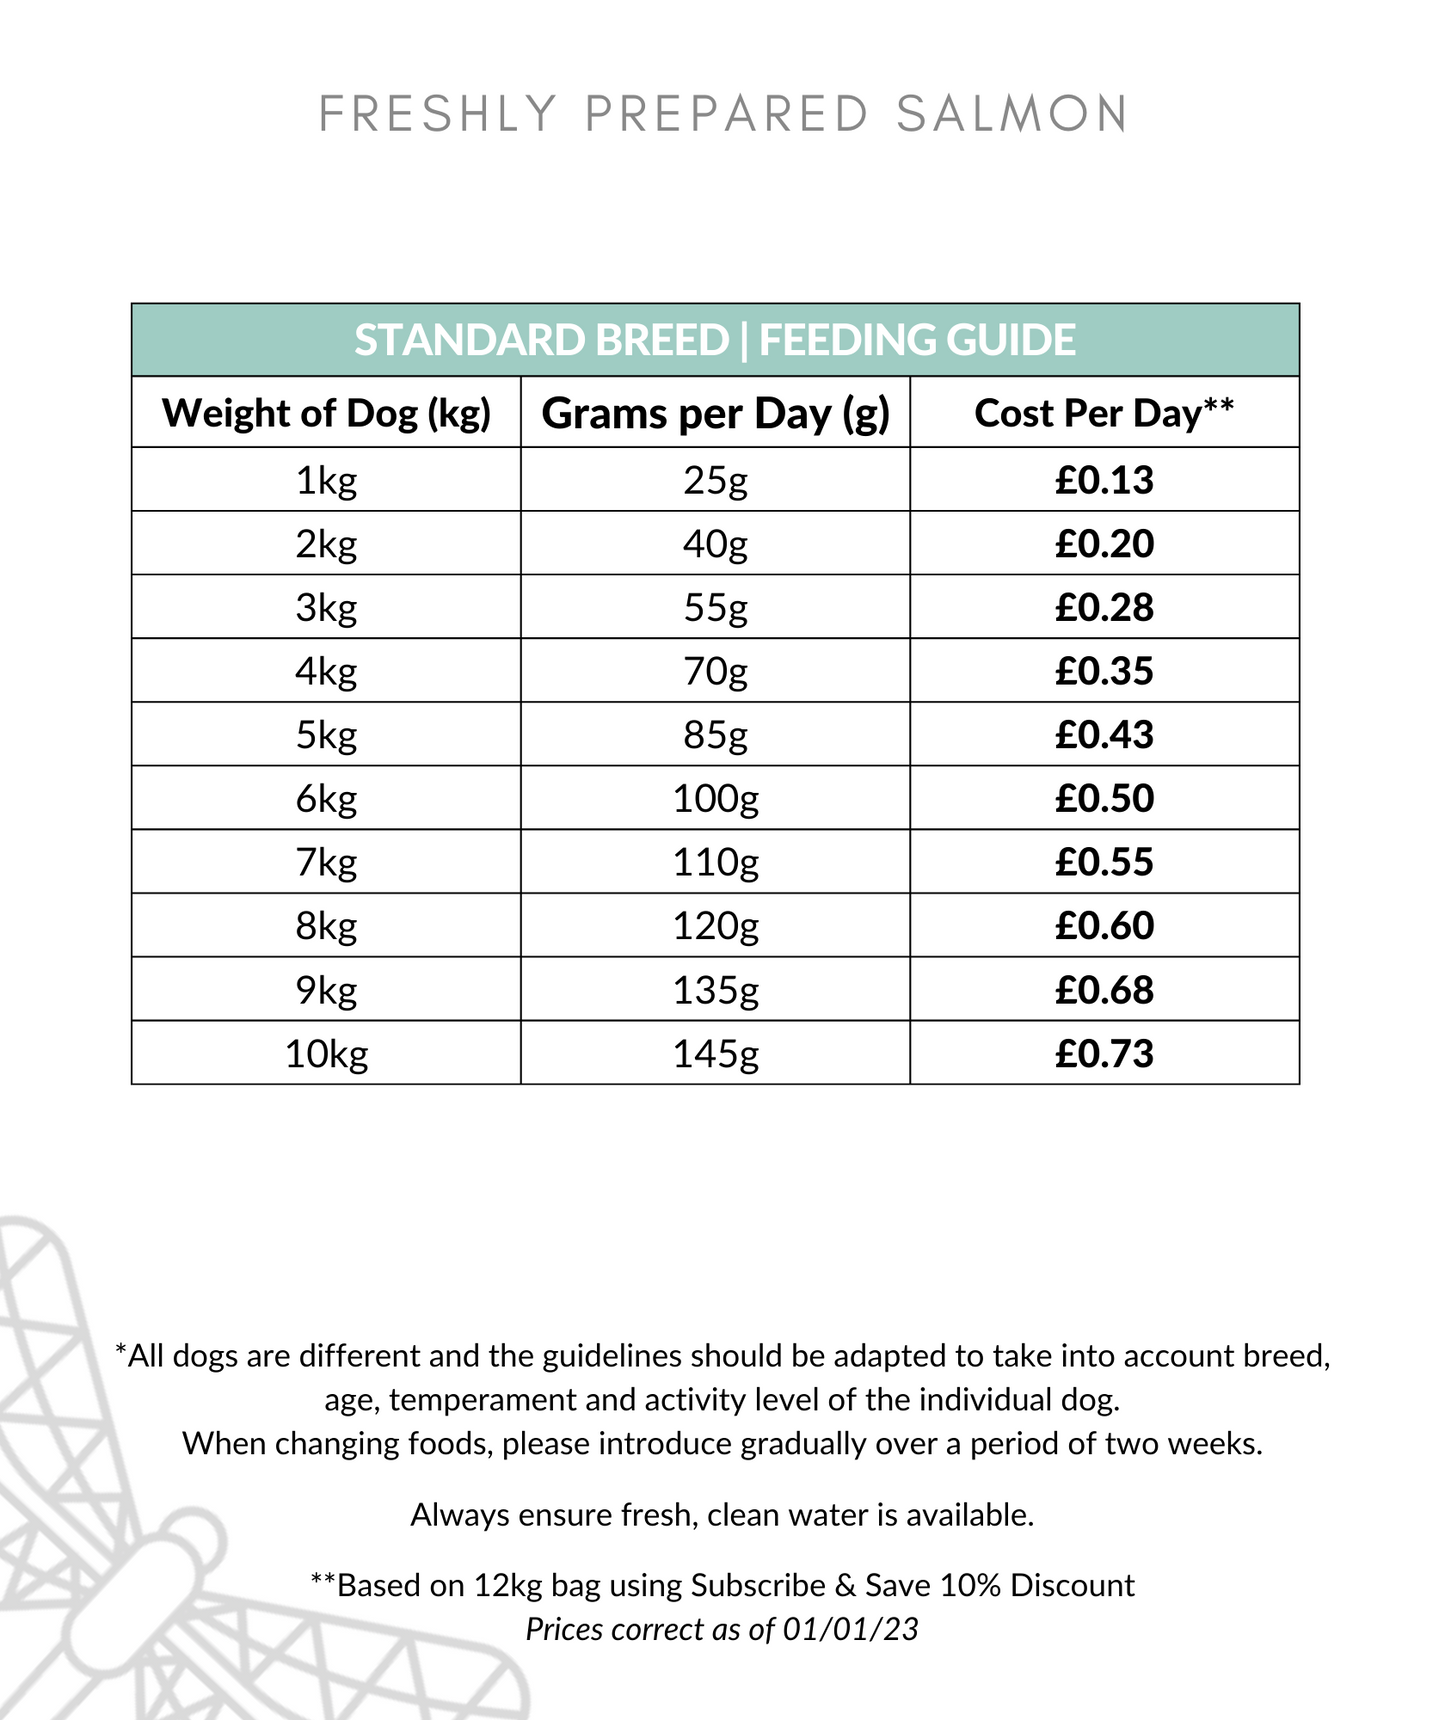 Freshly Prepared Salmon Dog Food Feeding Guide 1-10kg